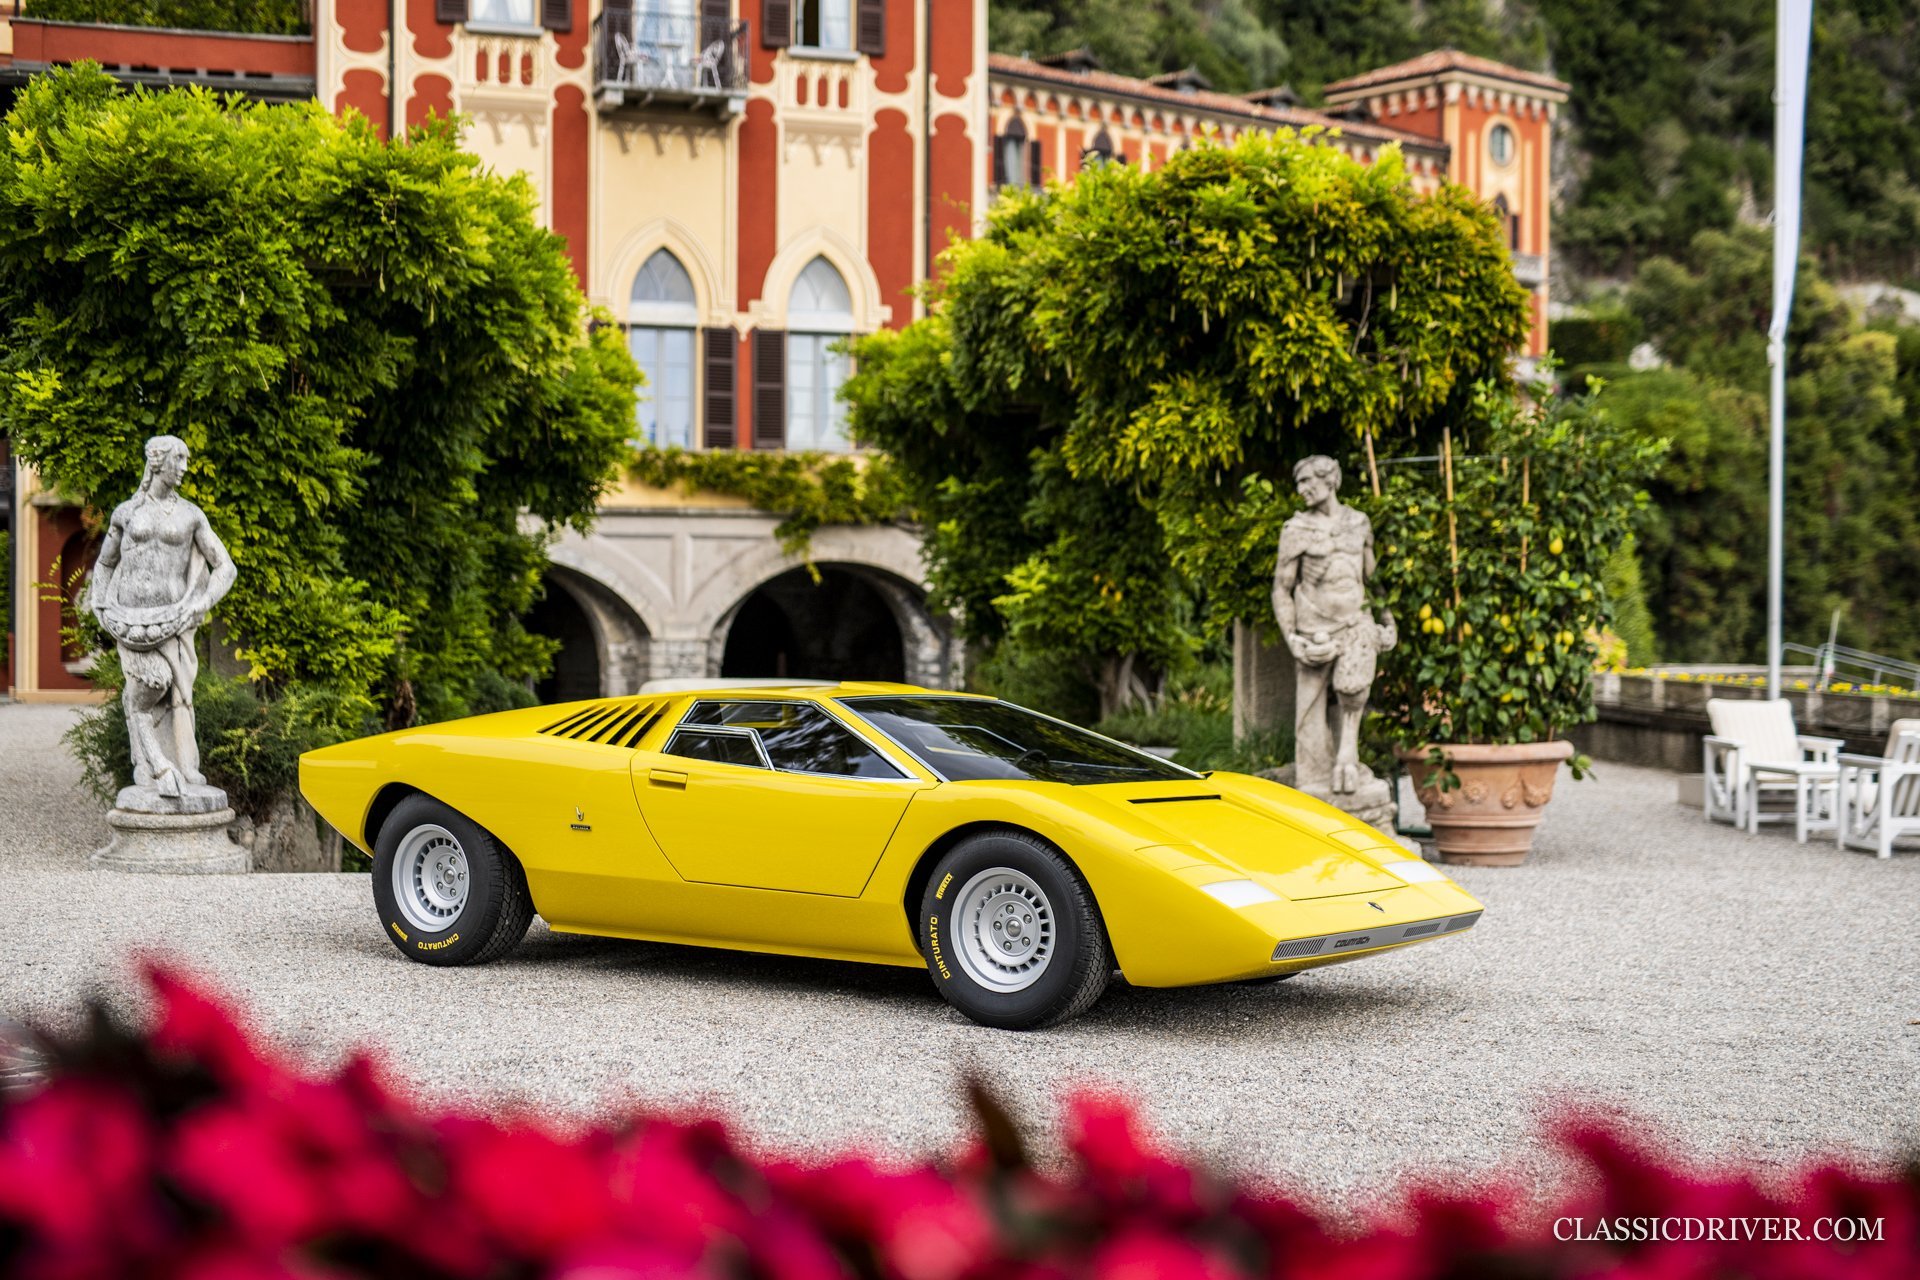 Crashed decades ago, the game-changing Lamborghini Countach LP 500